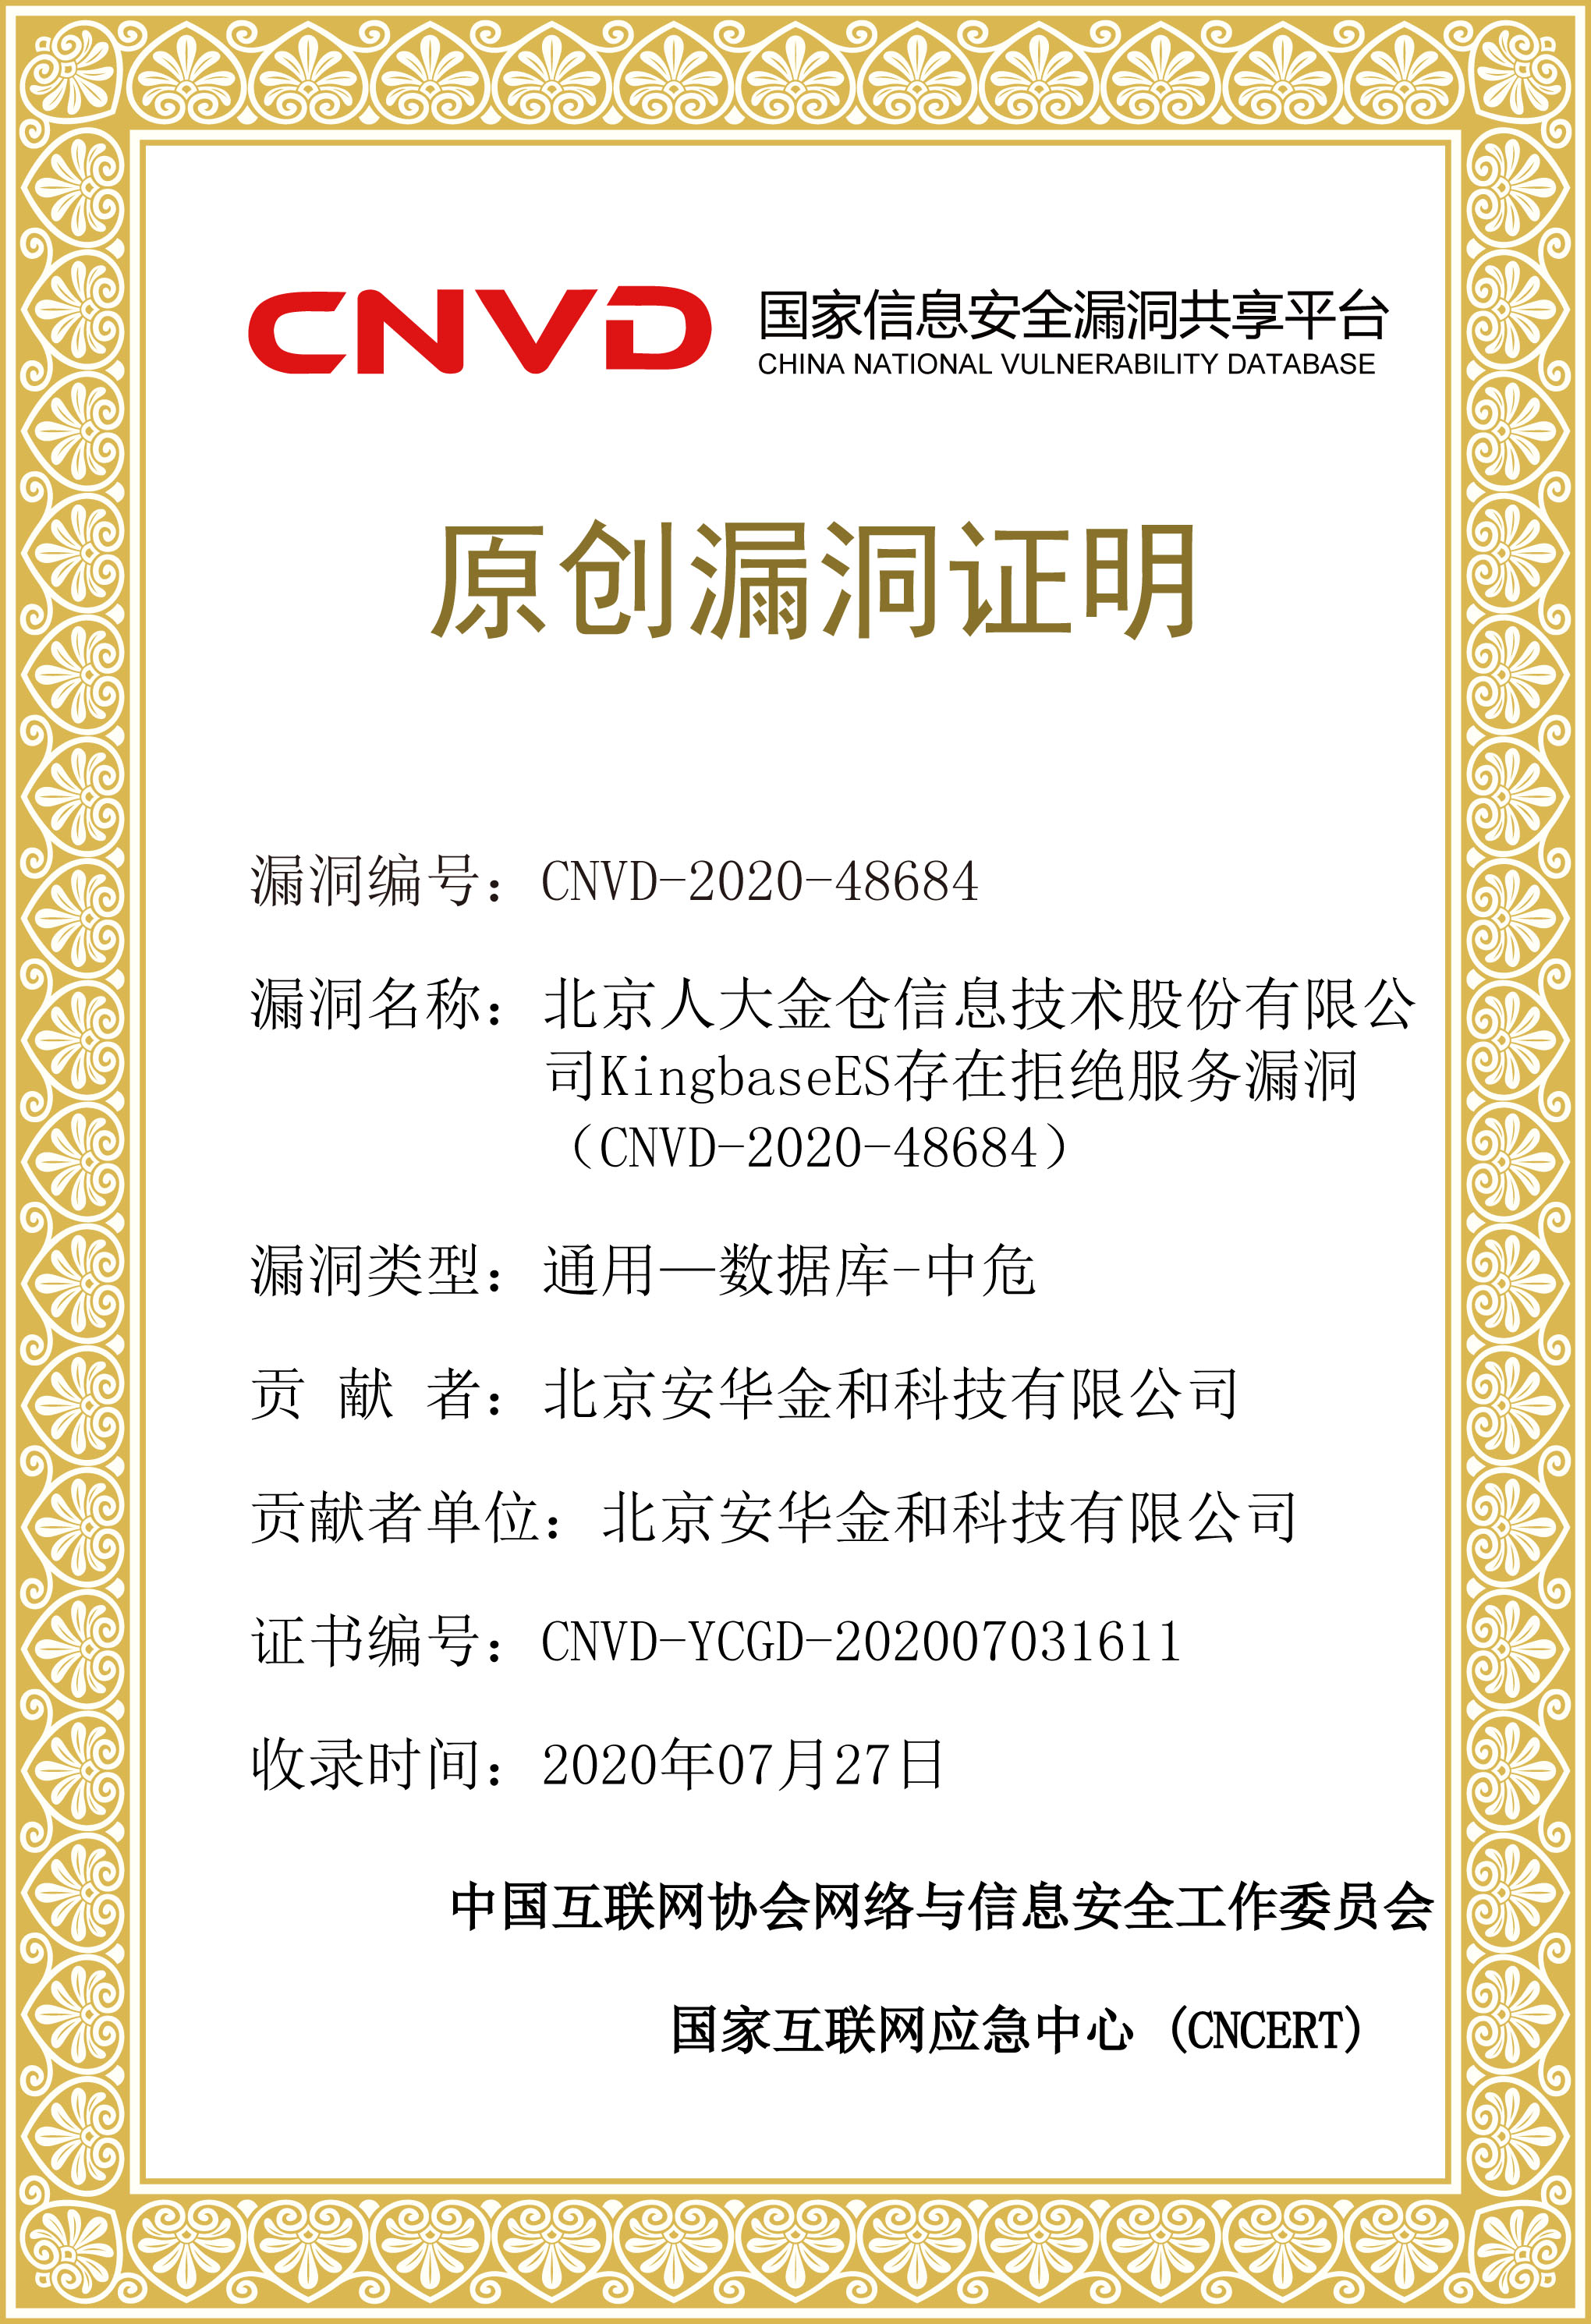 CNVD-YCGD-202007031611